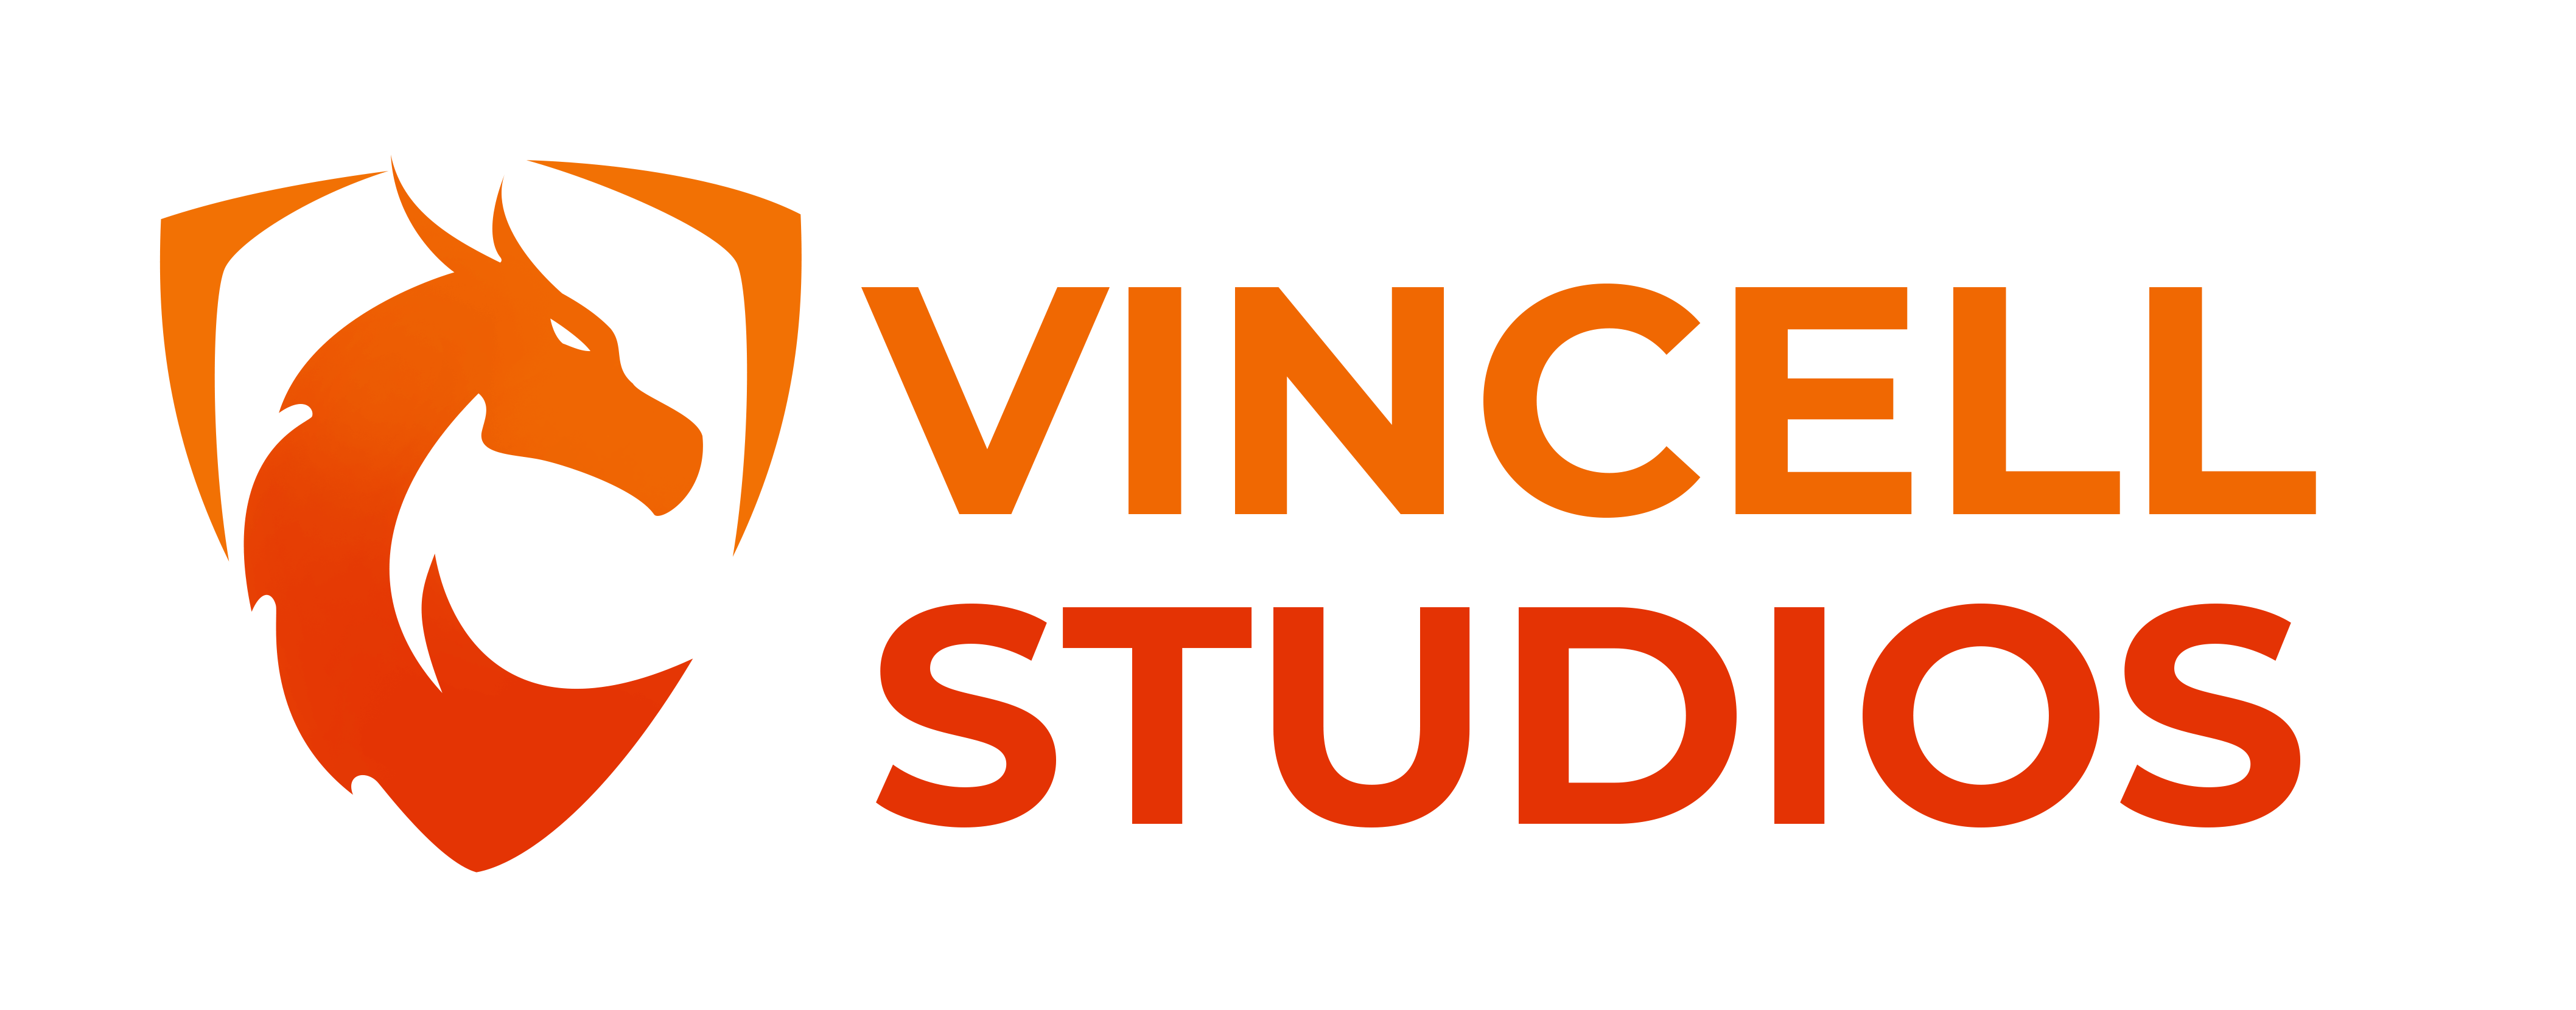 Vincell Studios Blog